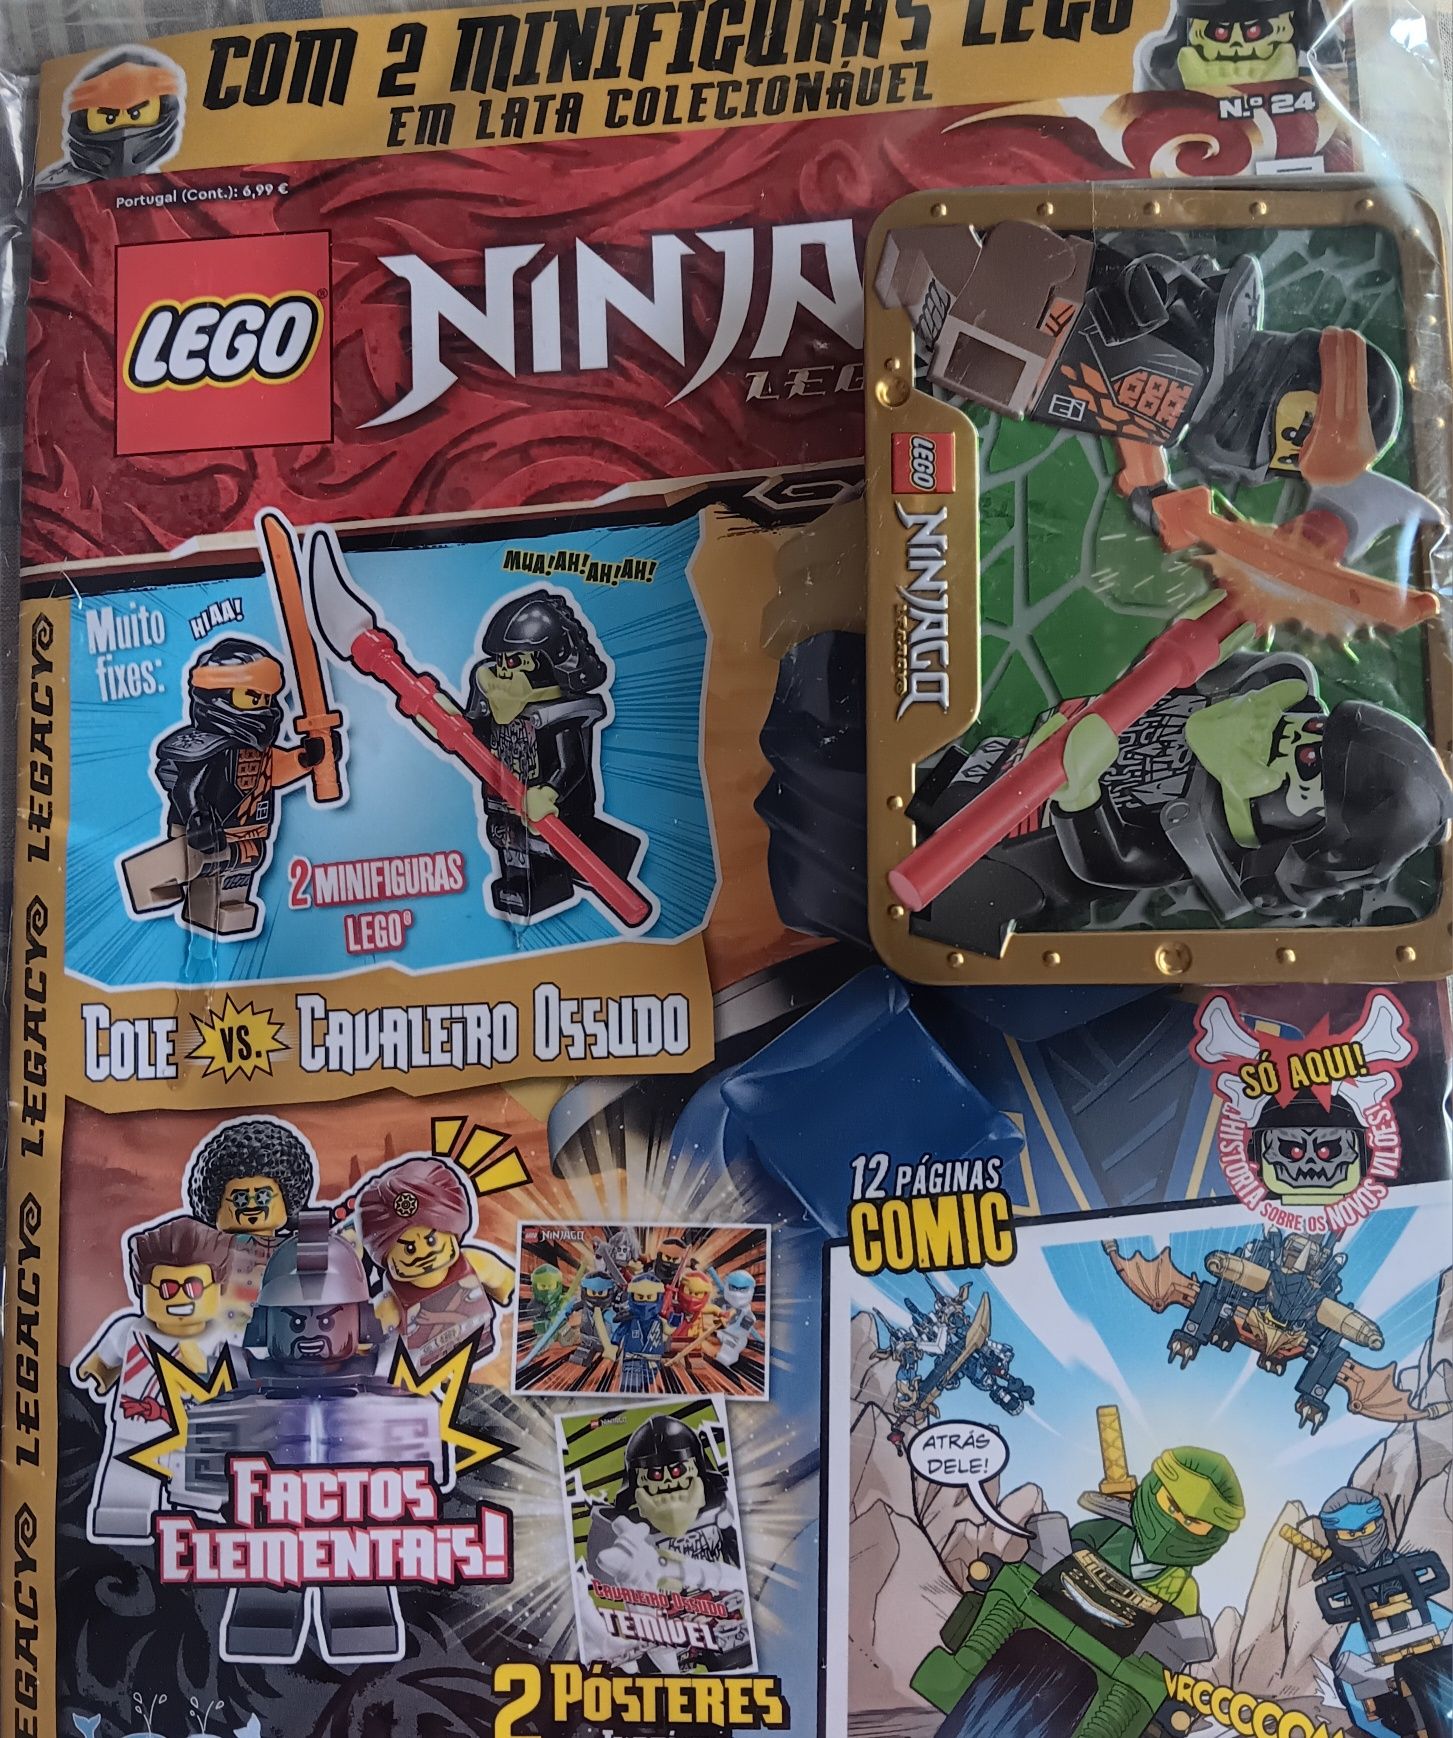 Revista Lego Ninjago Legacy com 2 minifiguras  selado